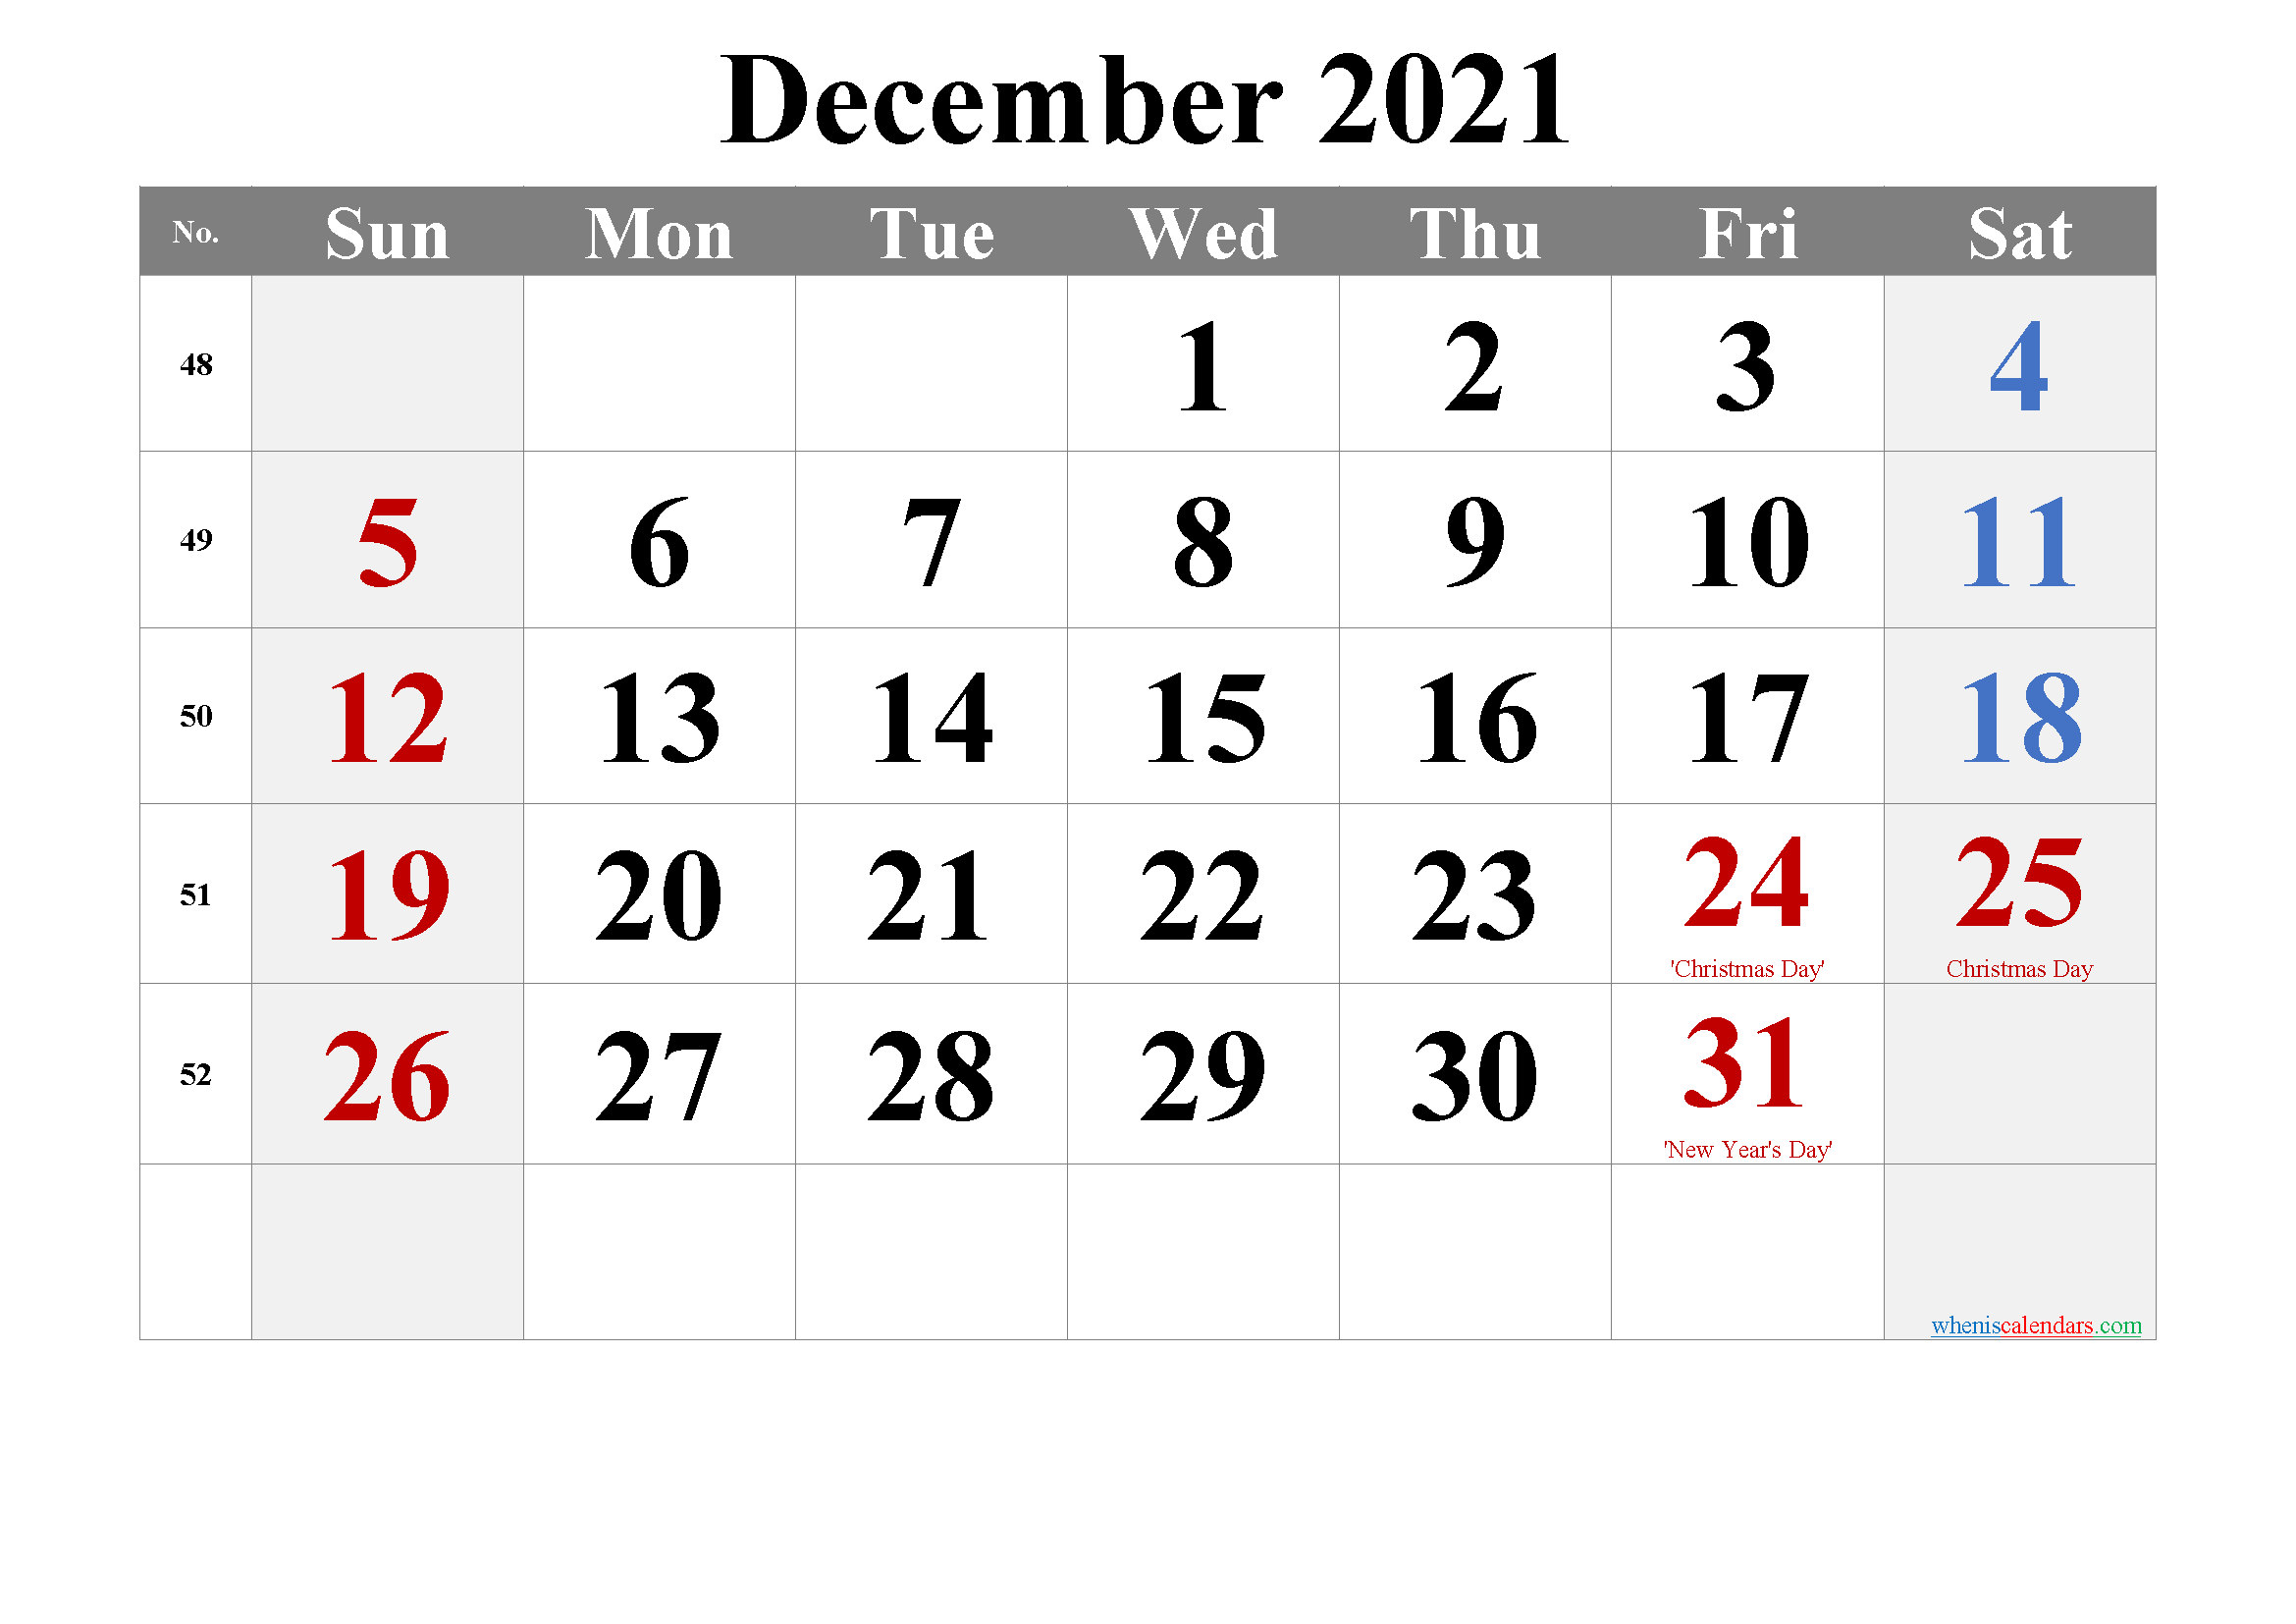 December 2021 Printable Calendar With Holidays - 6 Templates December Jan 2021 Calendar